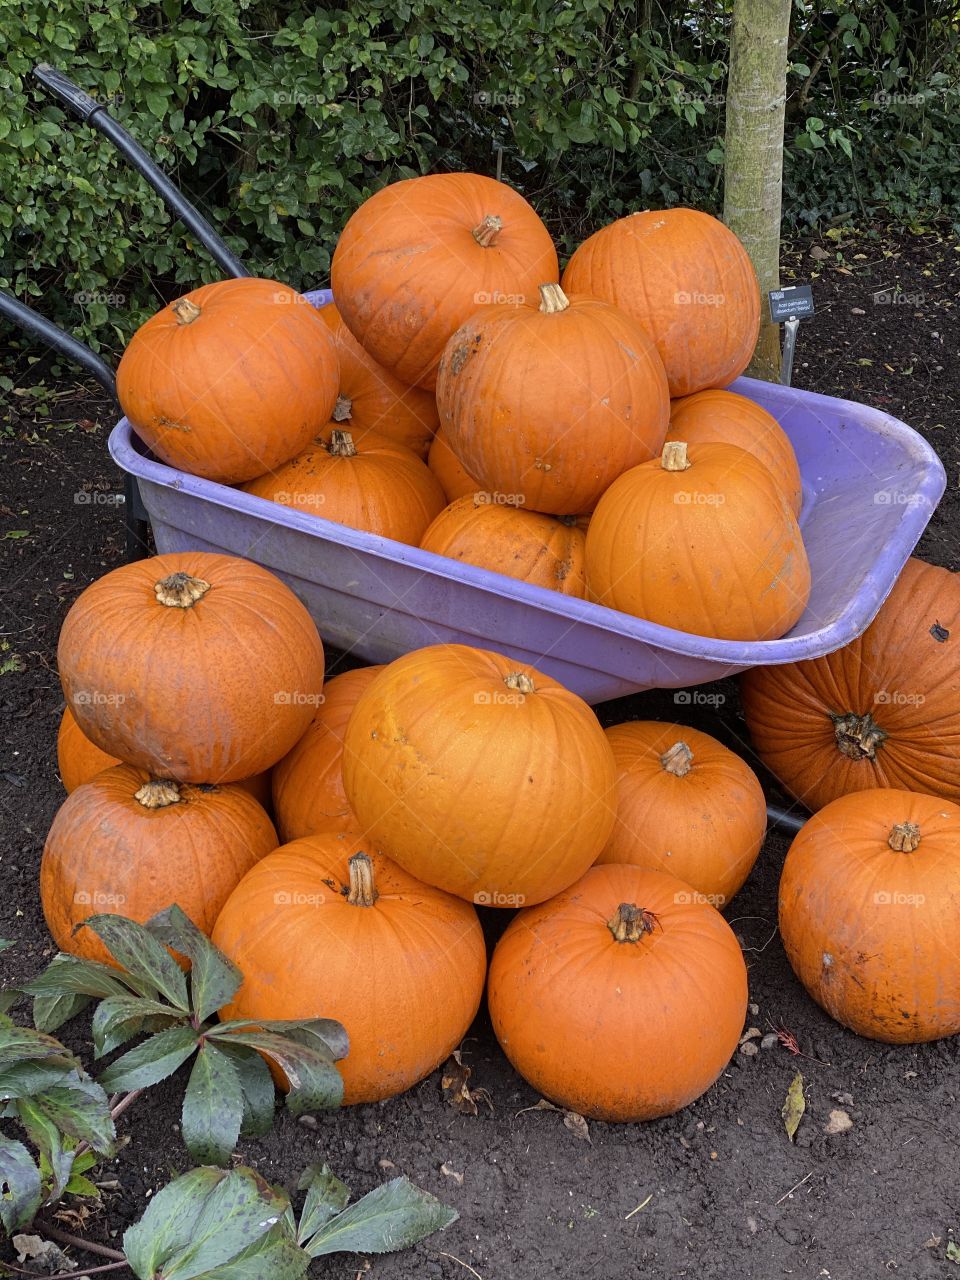 Pumpkin anyone?? 